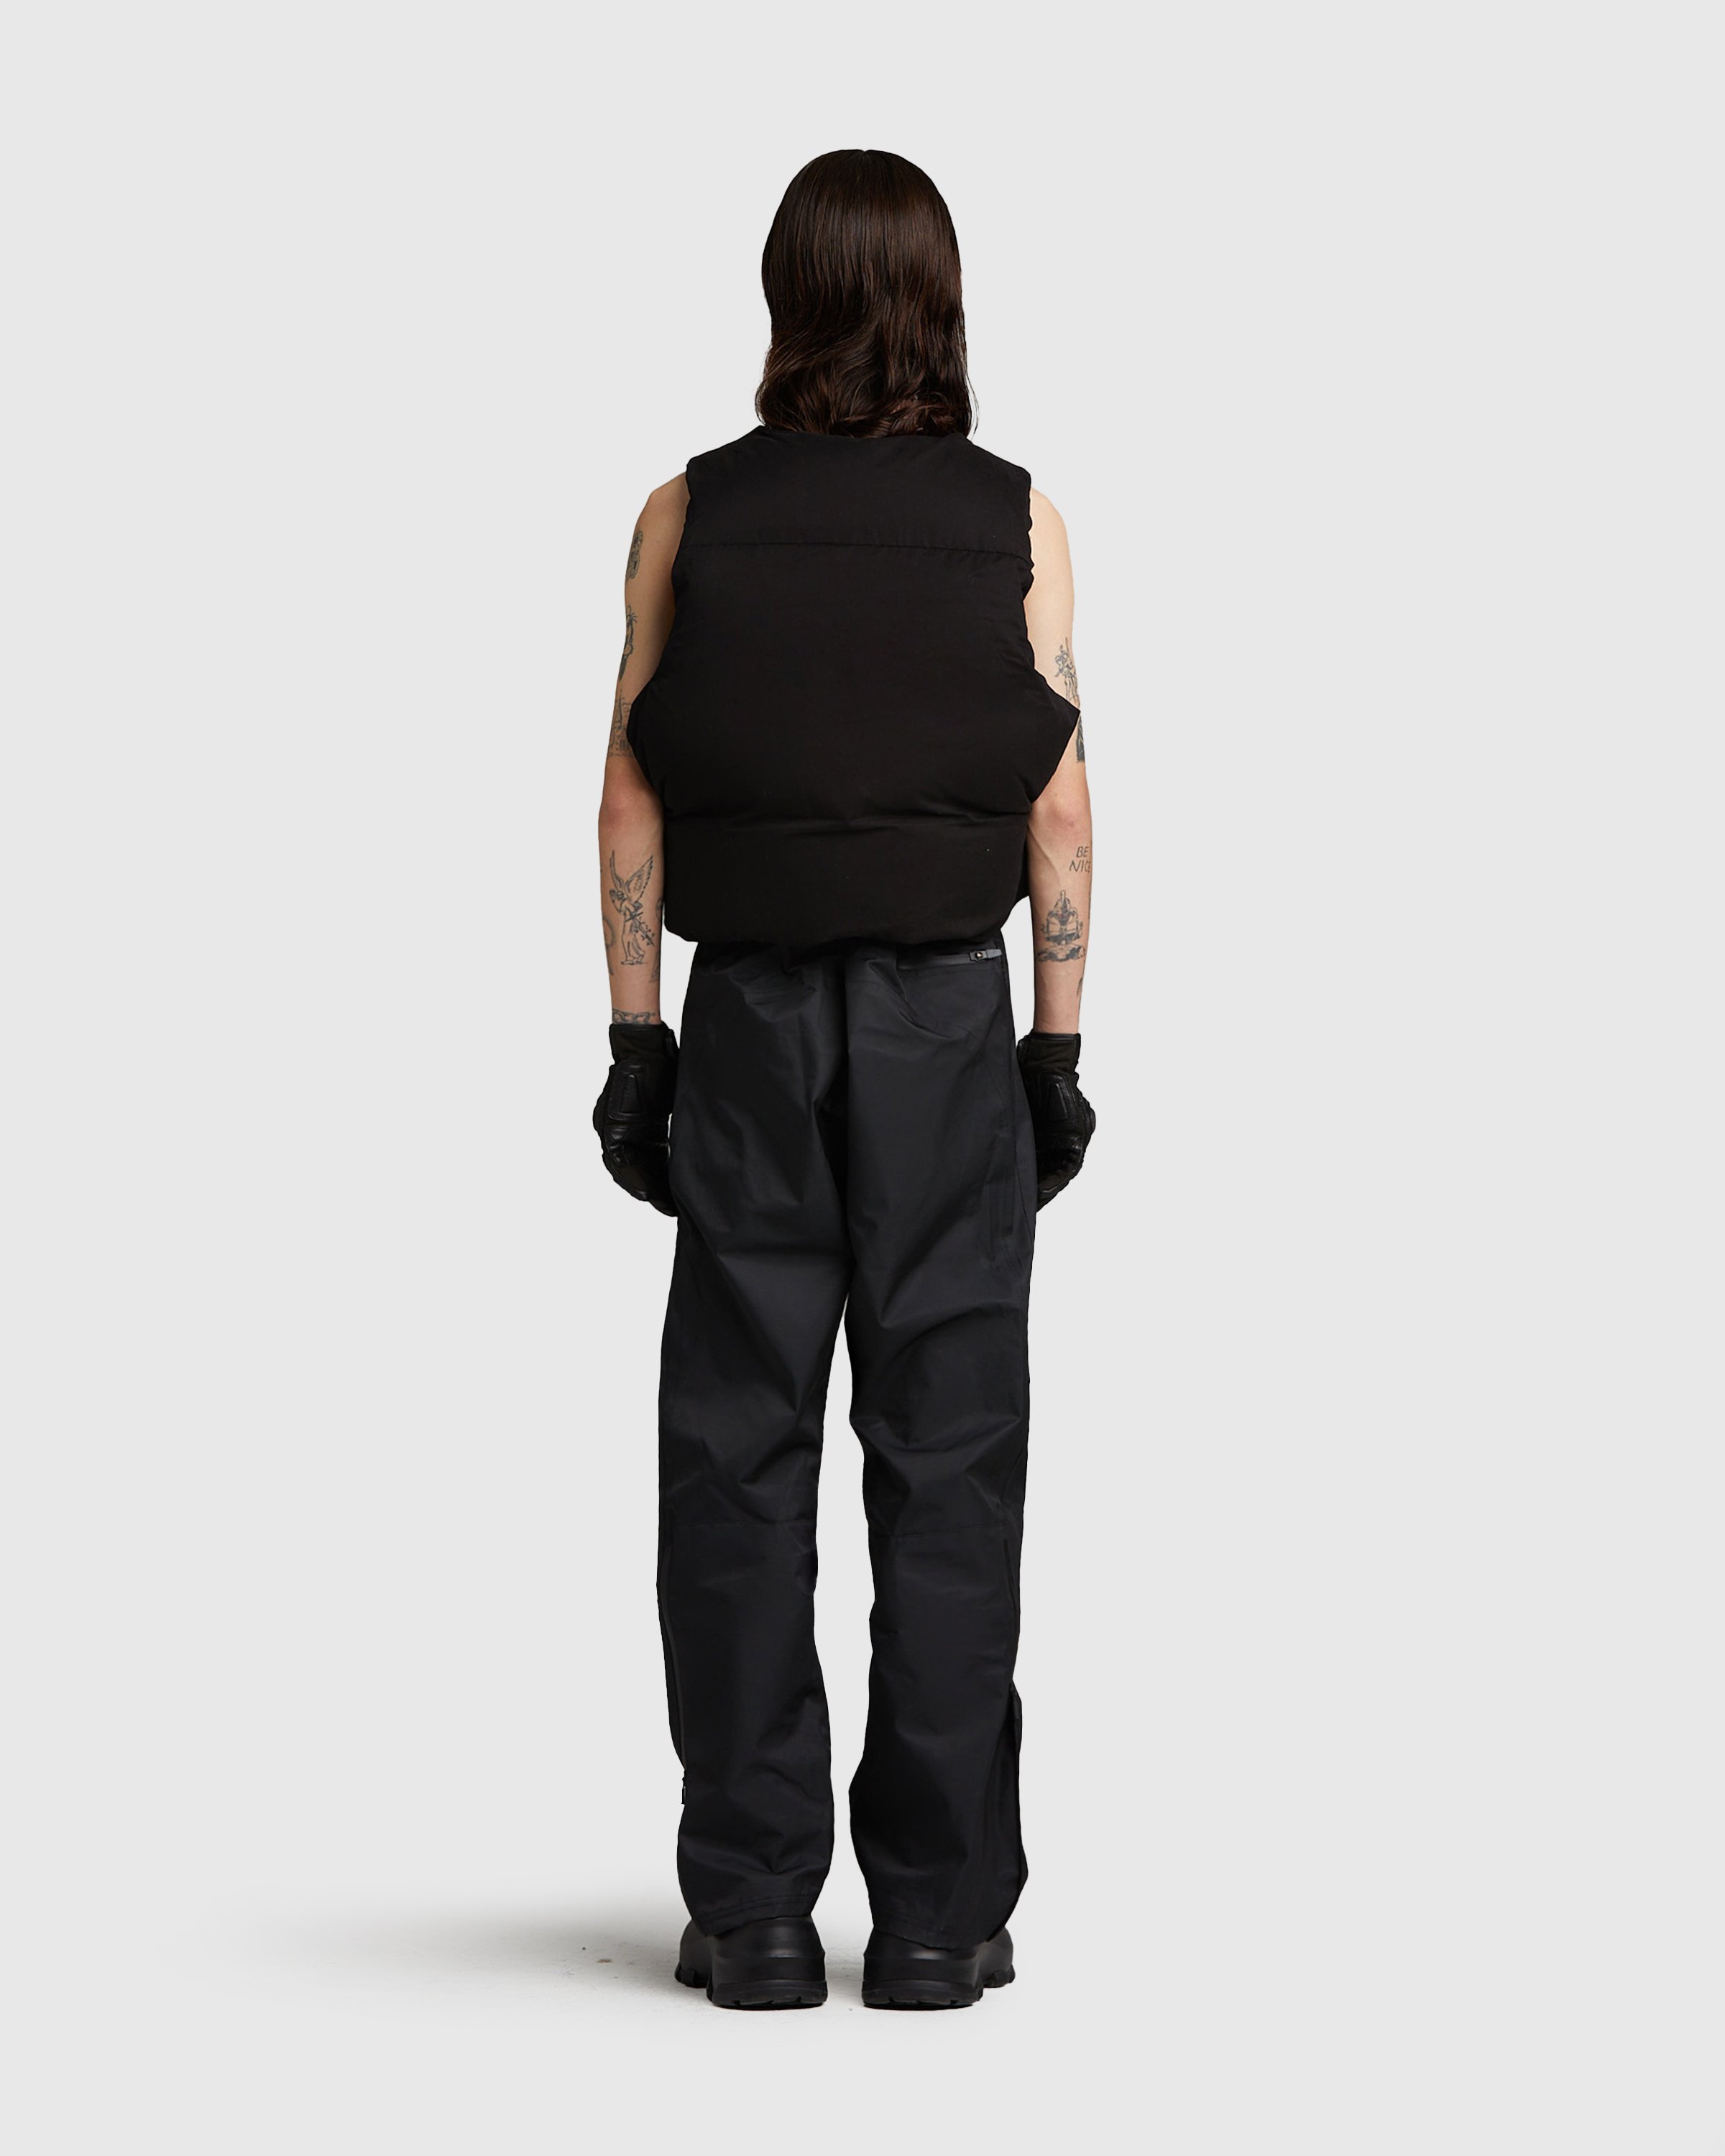 Entire Studios - Pillow Vest Soot - Clothing - Black - Image 5